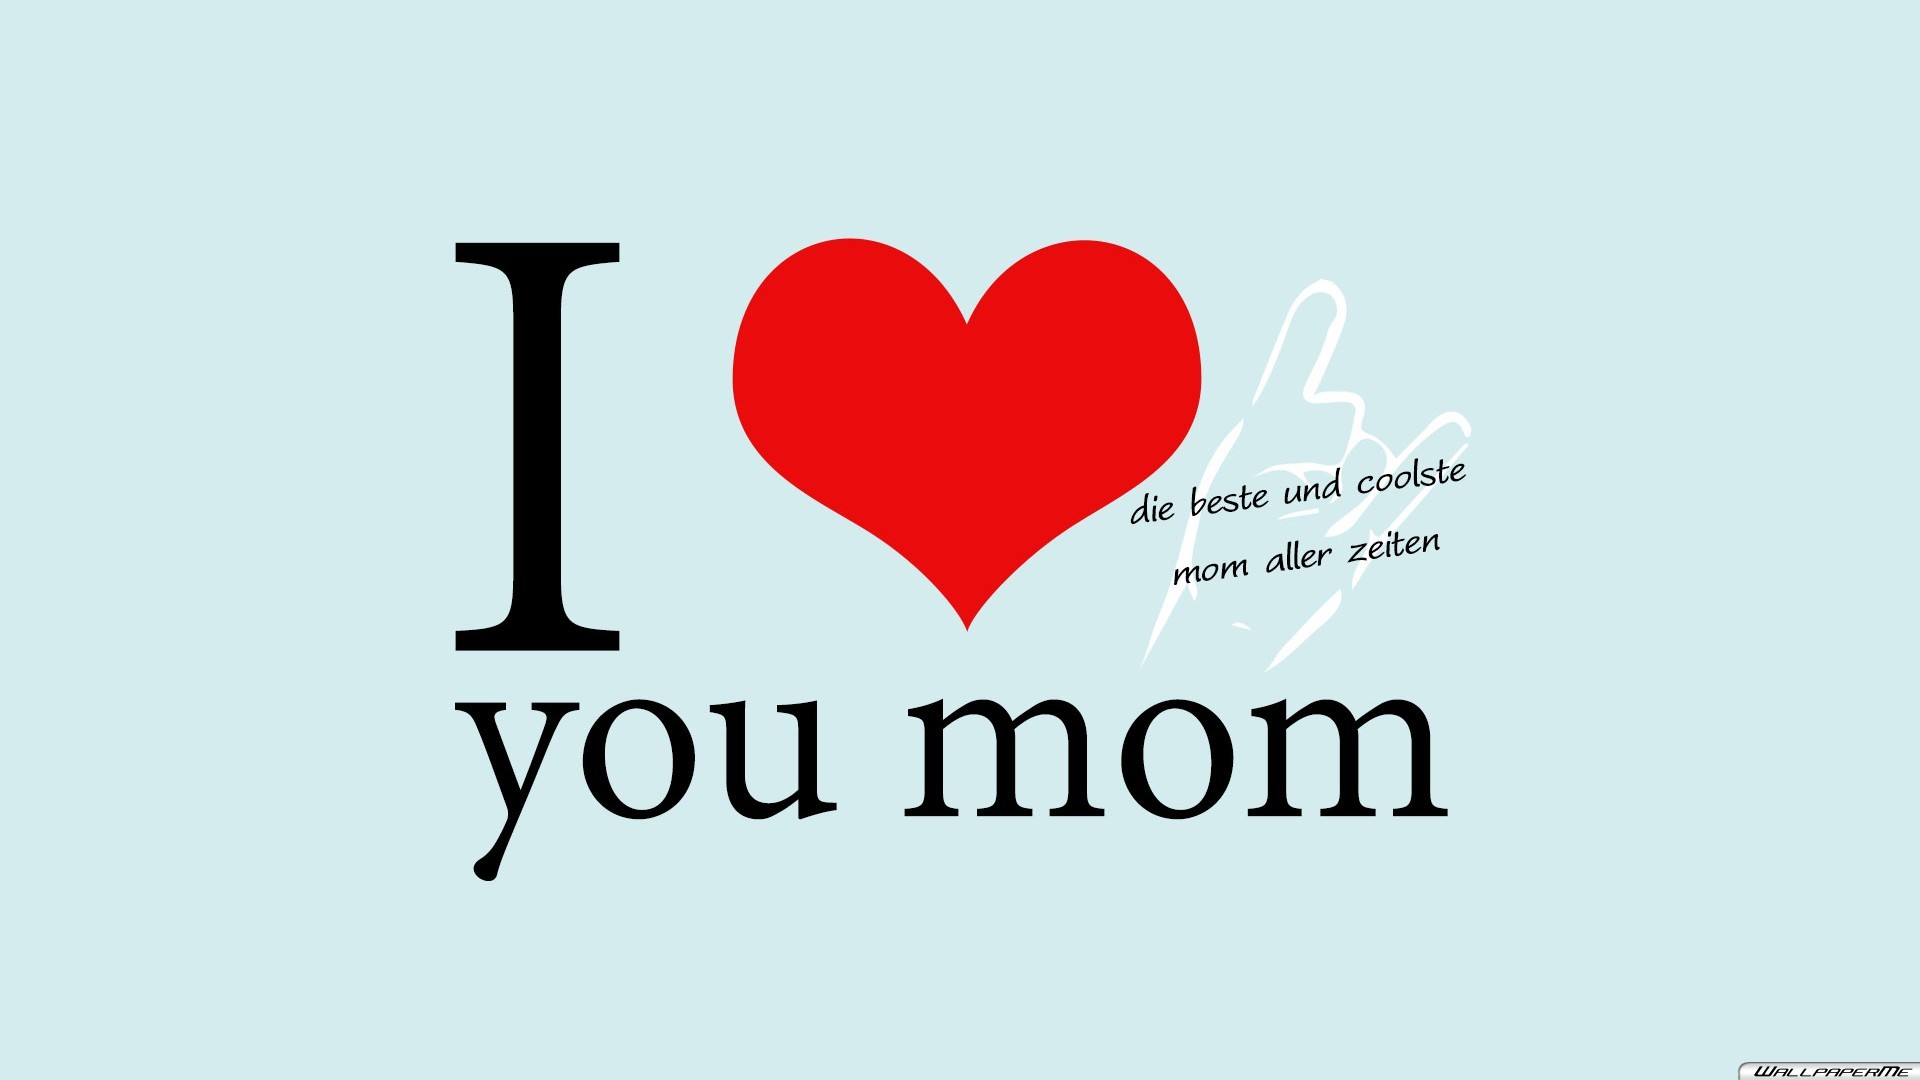 Loving mom 3. Обои i Love you. I Love mom обои. Обои l Love you mum. I Love mom на черном фоне.